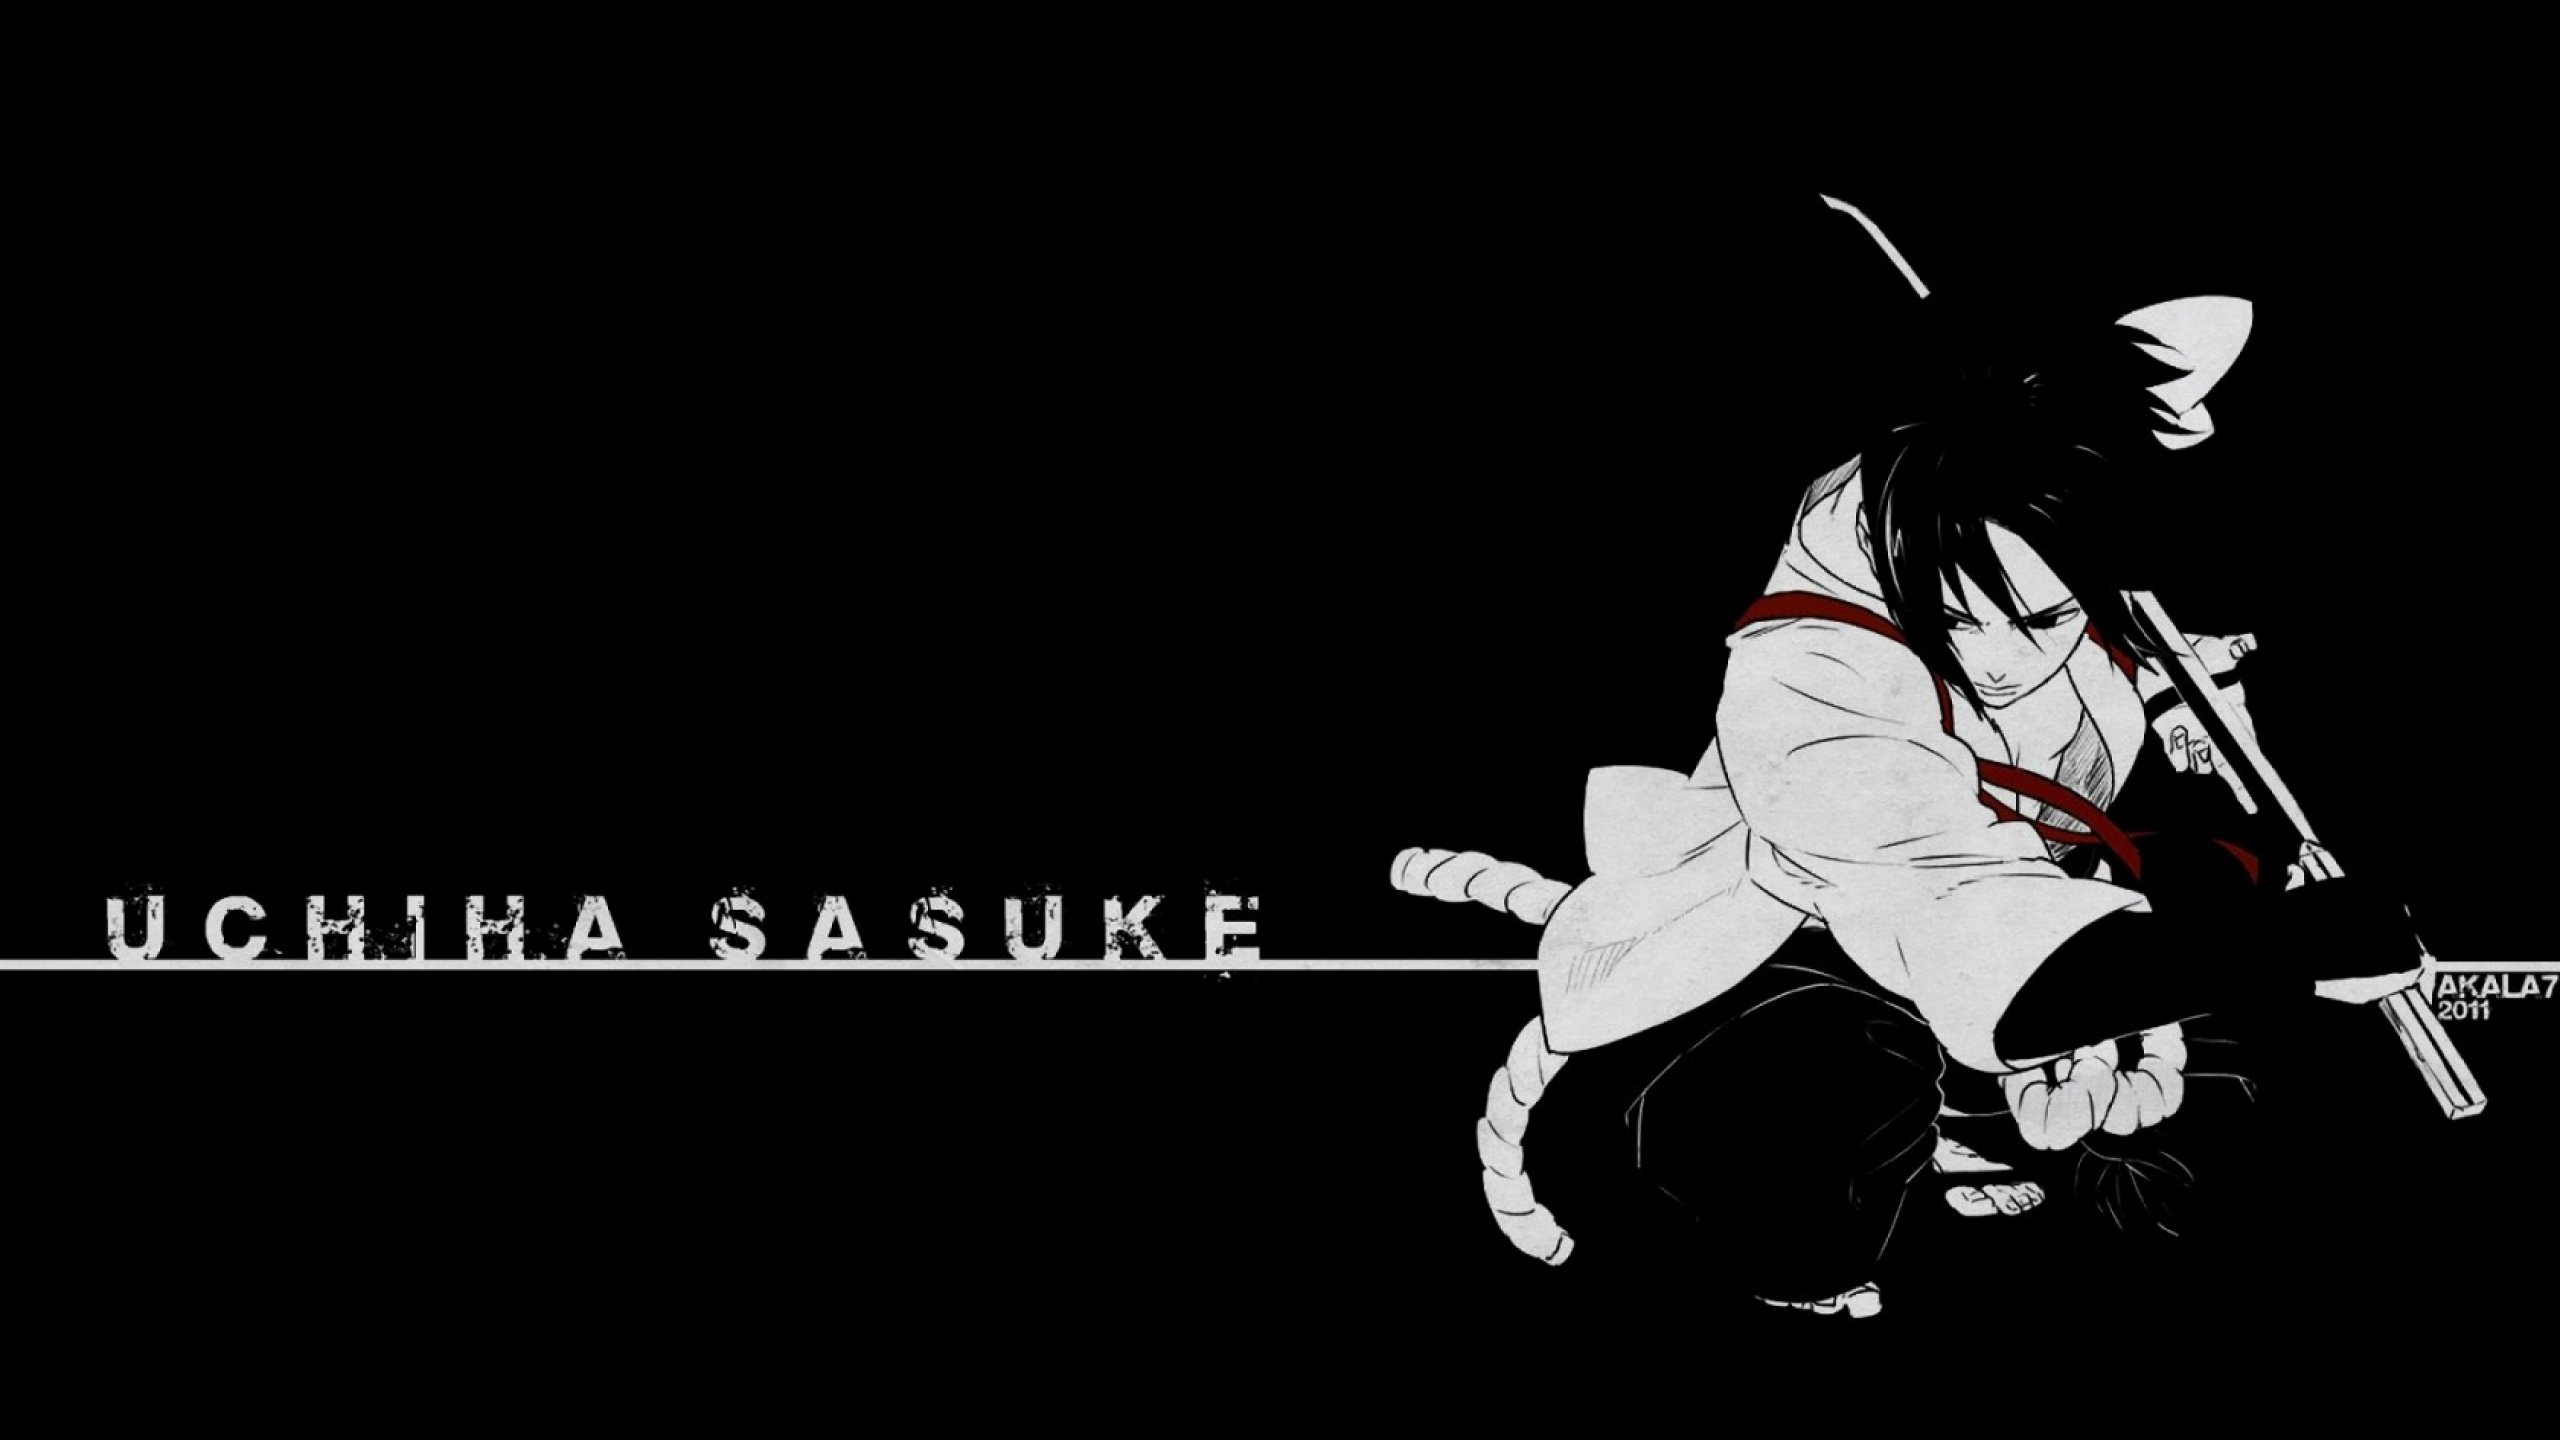 Dark Sasuke  Naruto  Anime Background Wallpapers on Desktop Nexus Image  913807